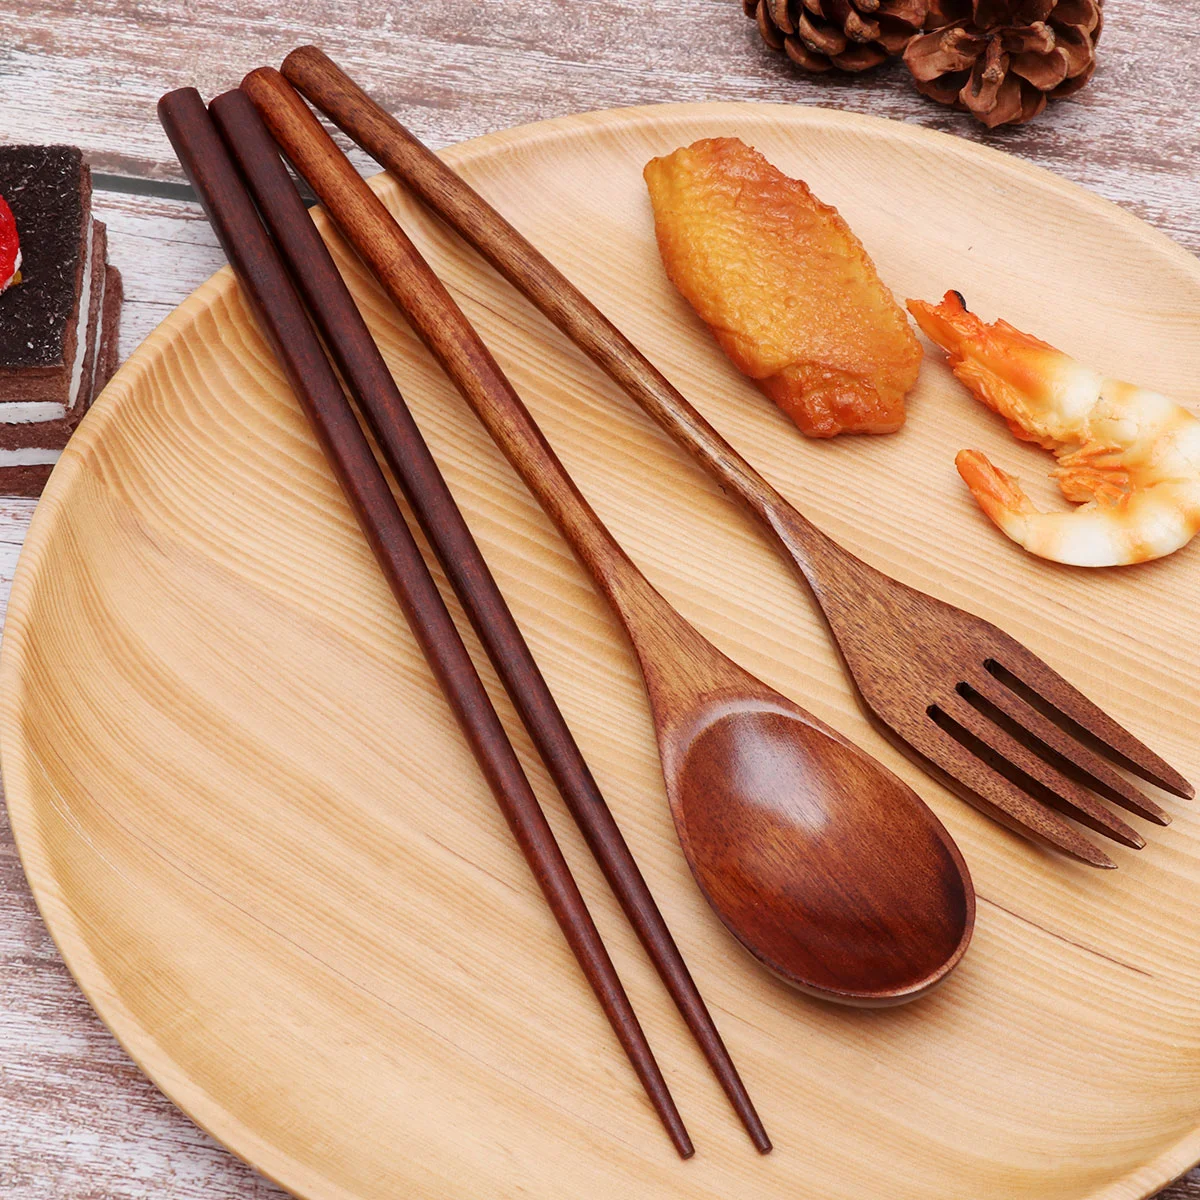 

Wooden Cutlery Spoon Fork Travel Wood Set Chopsticks Eating Salad Dessert Tableware Silverware Japanese Utensil Table Forks